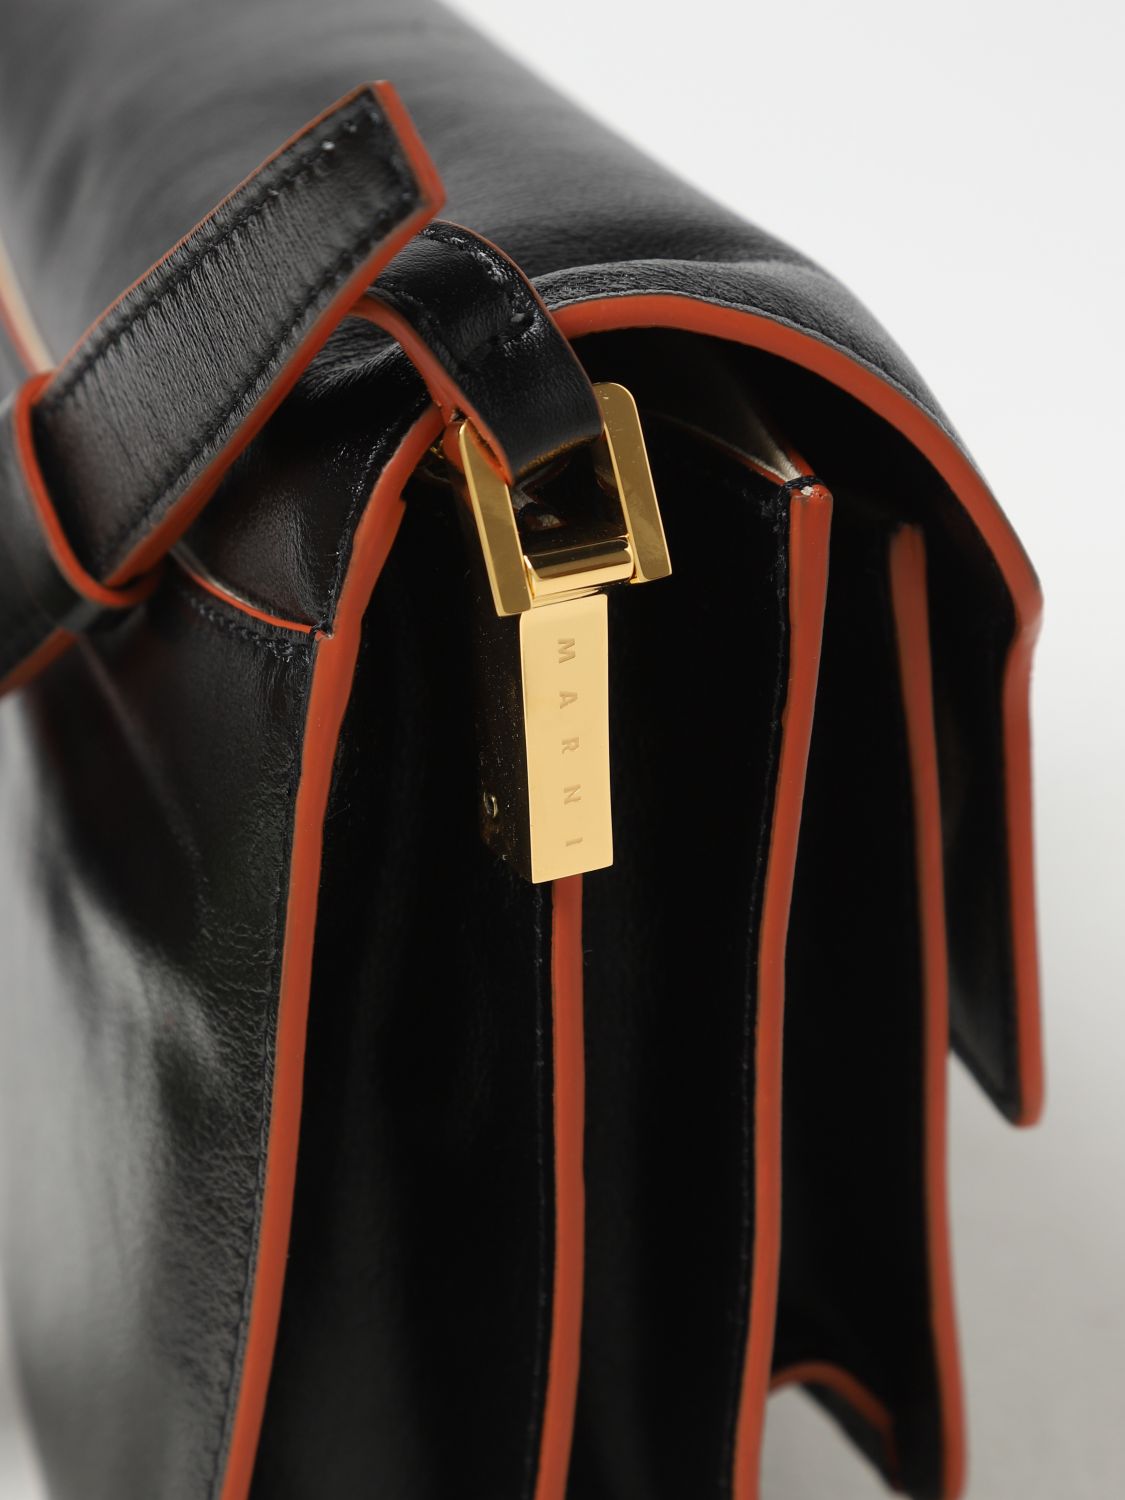 MARNI: Trunk Soft bag in tumbled leather - Pink  Marni mini bag  SBMP0103Q5P2644 online at